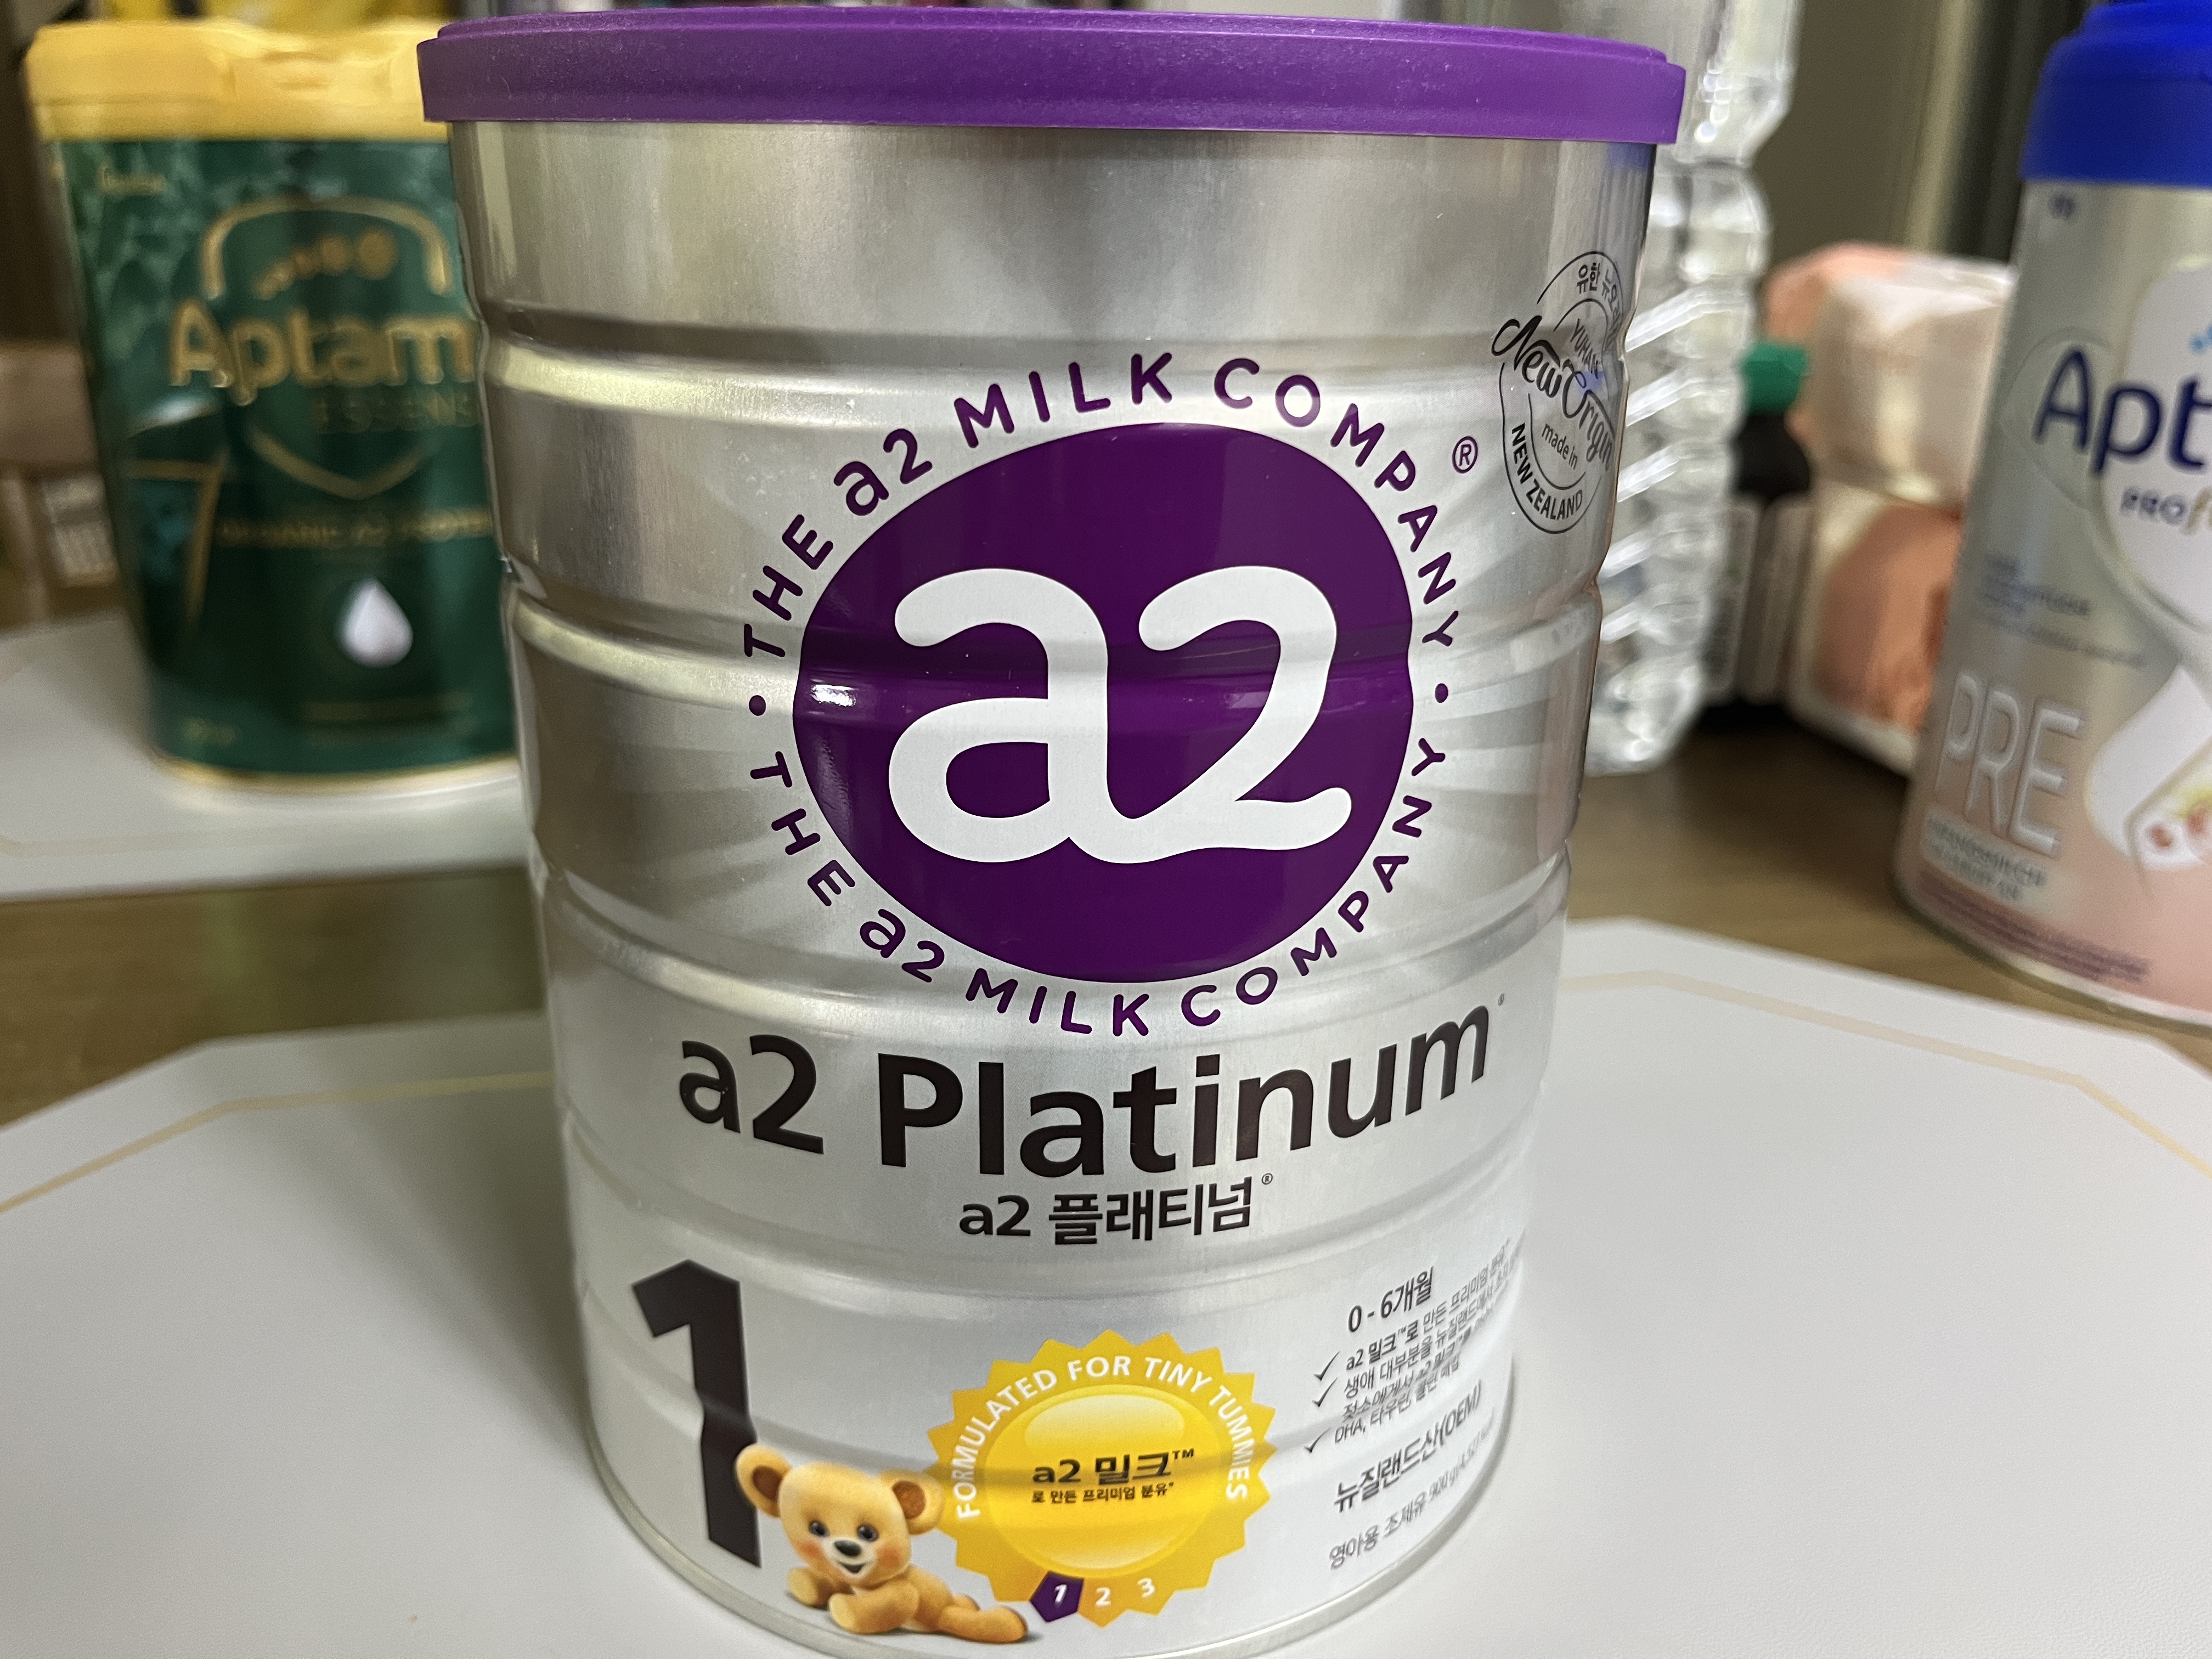 baby formula - A2 platinum
아기 분유 - A2 플래티넘